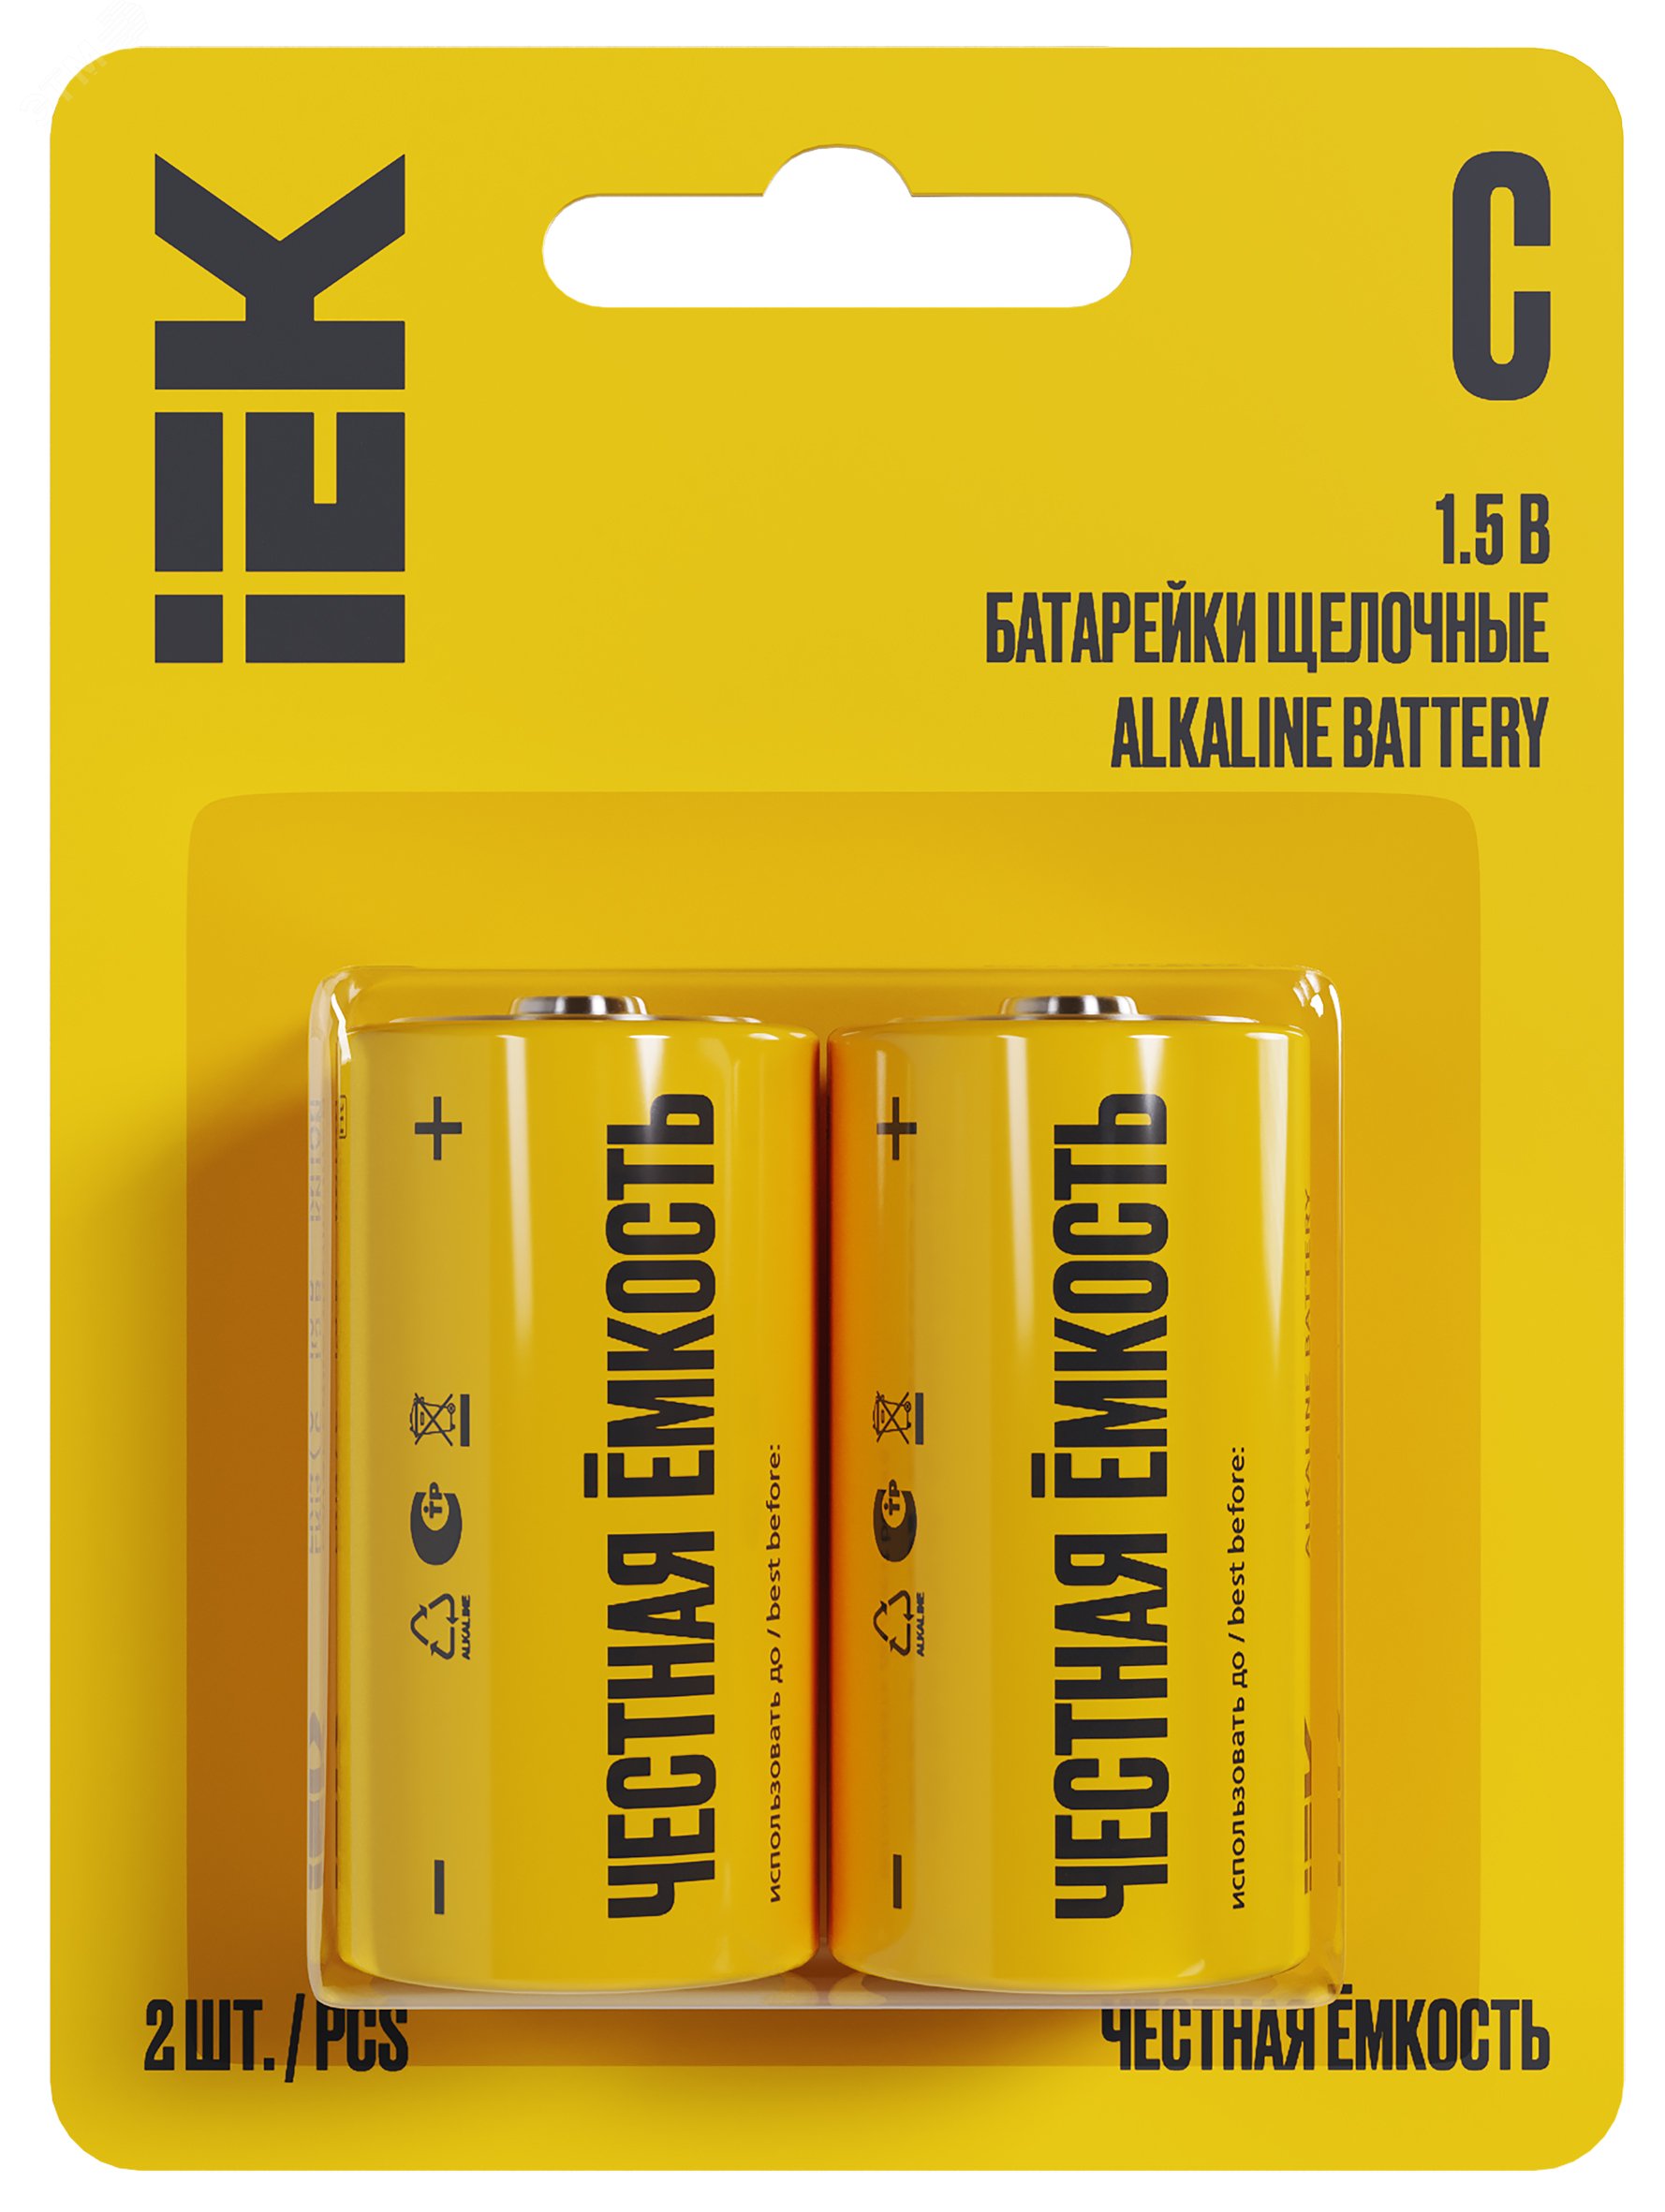 Батарейка щелочная Alkaline  LR14/C (2шт/блистер) ABT-LR14-OP-L02 IEK - превью 2